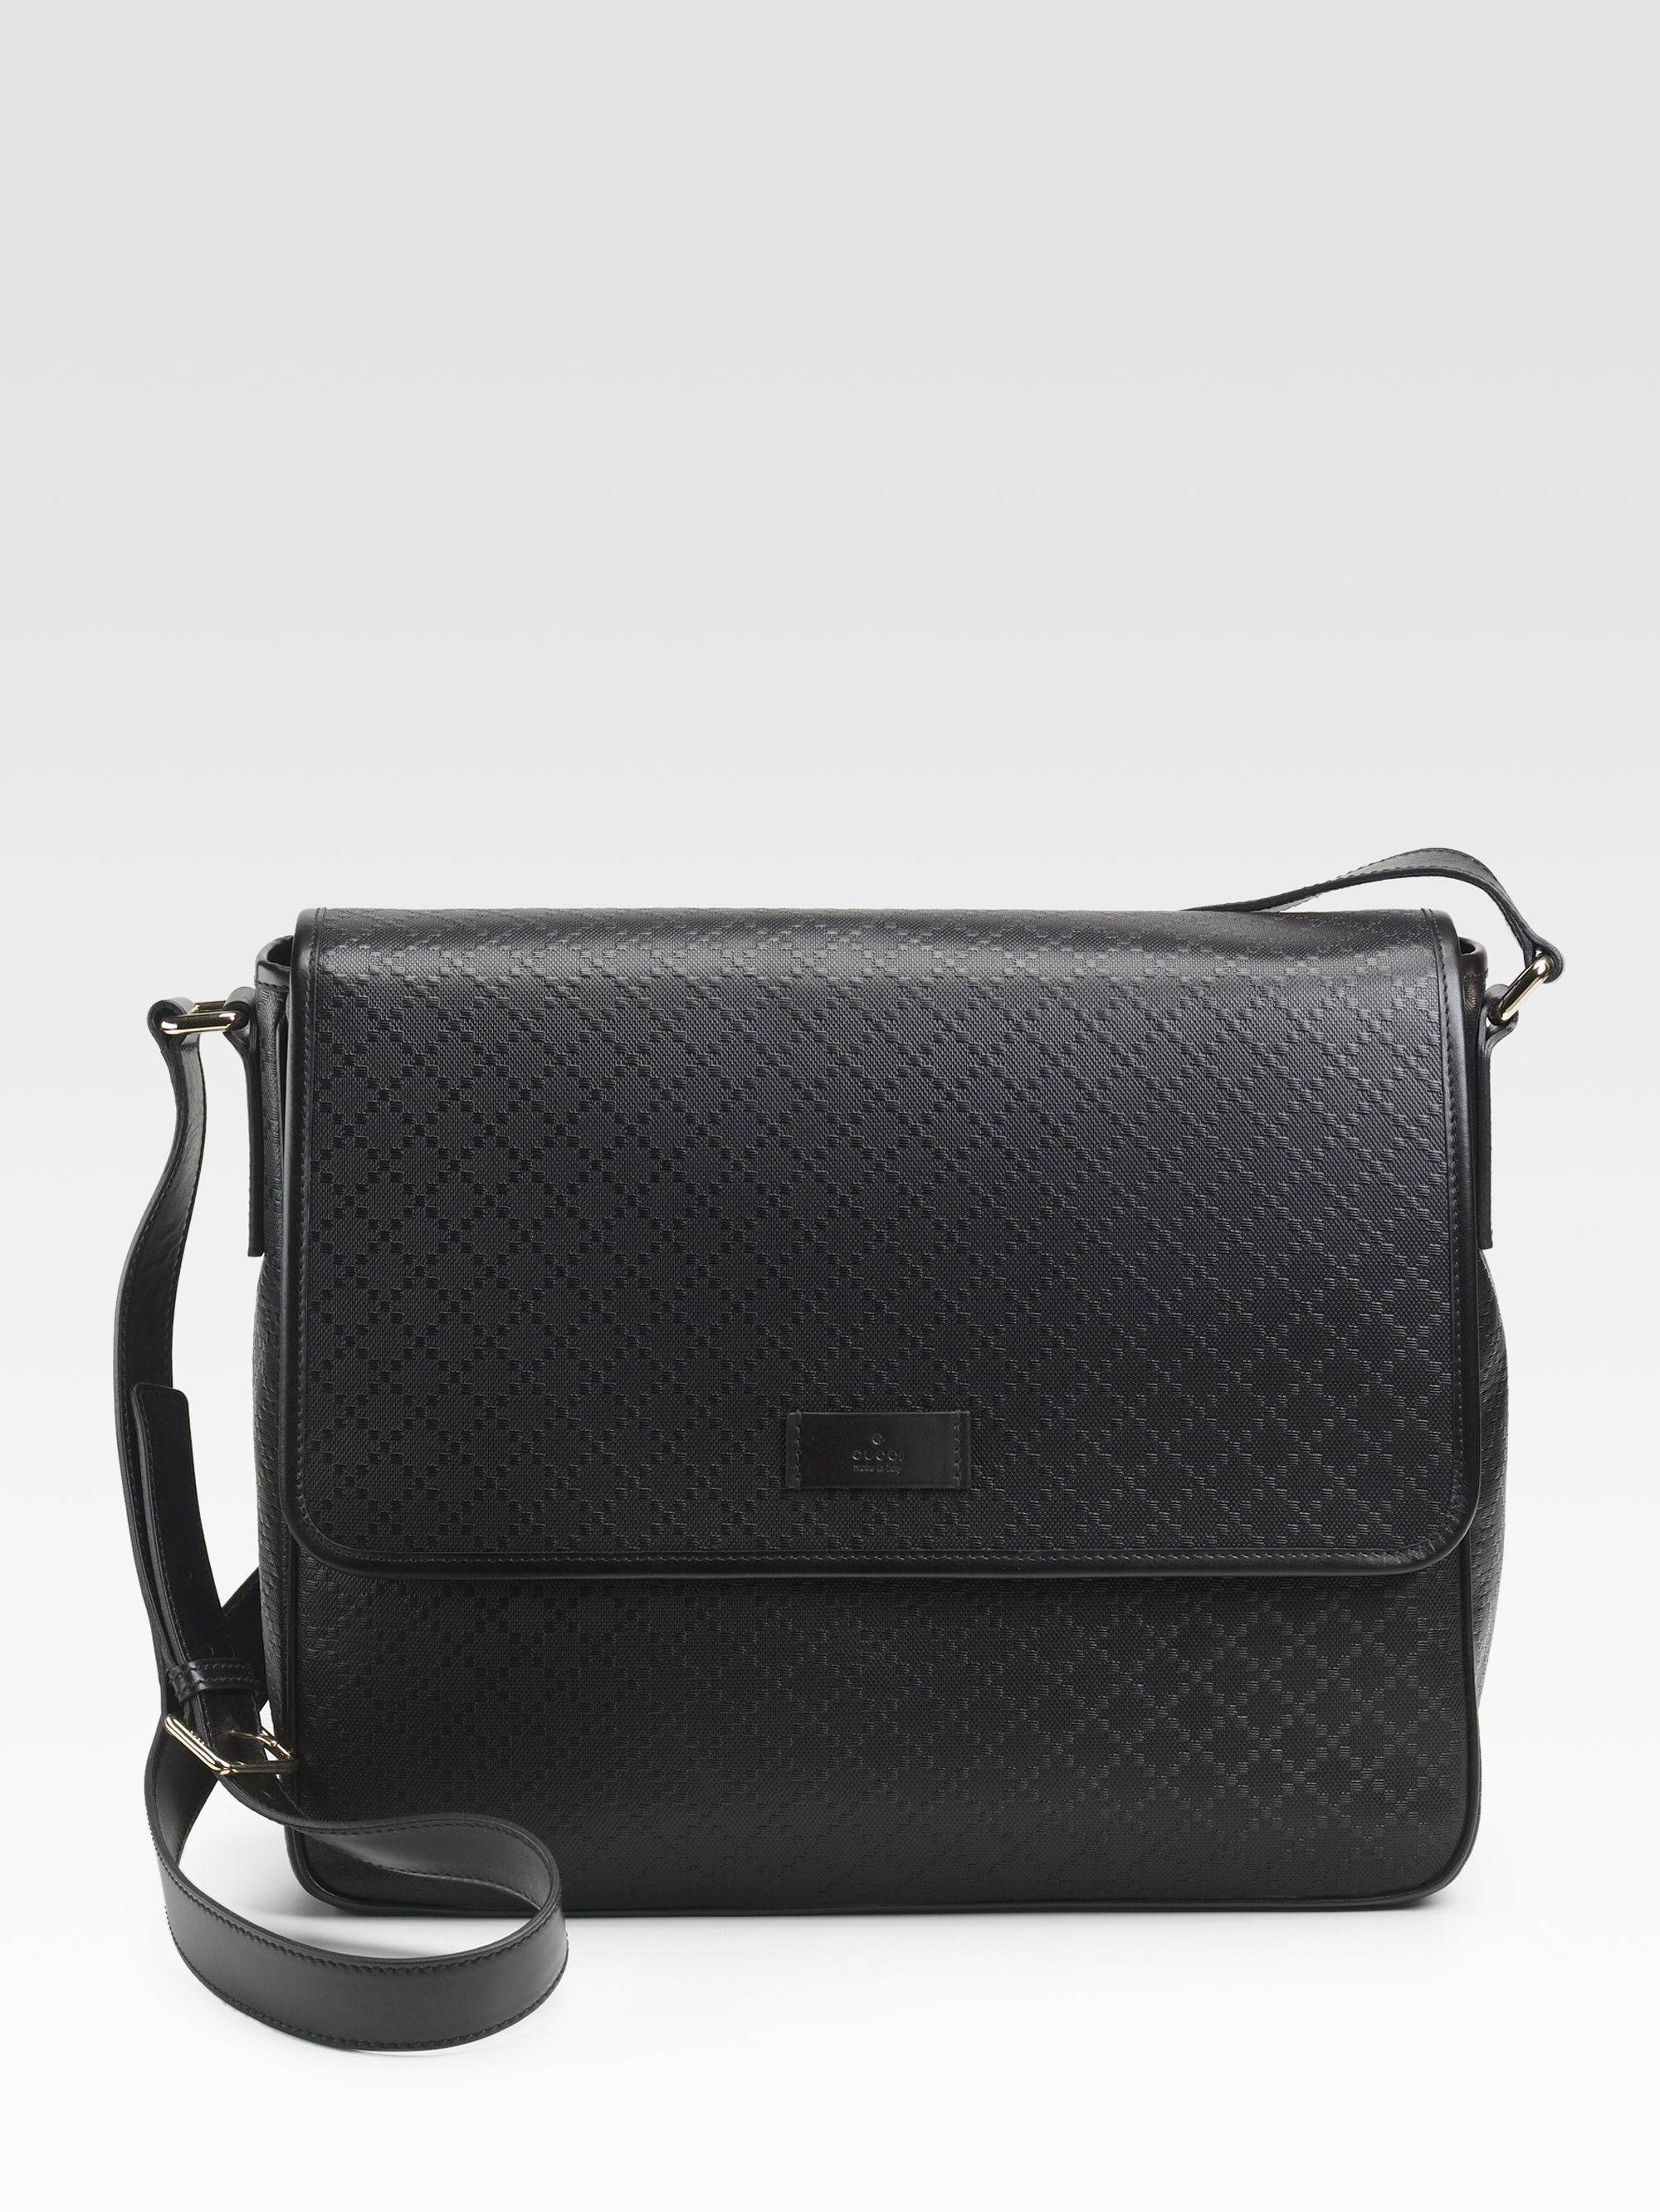 Gucci Diamante Lux Messenger Bag in Black for Men - Lyst